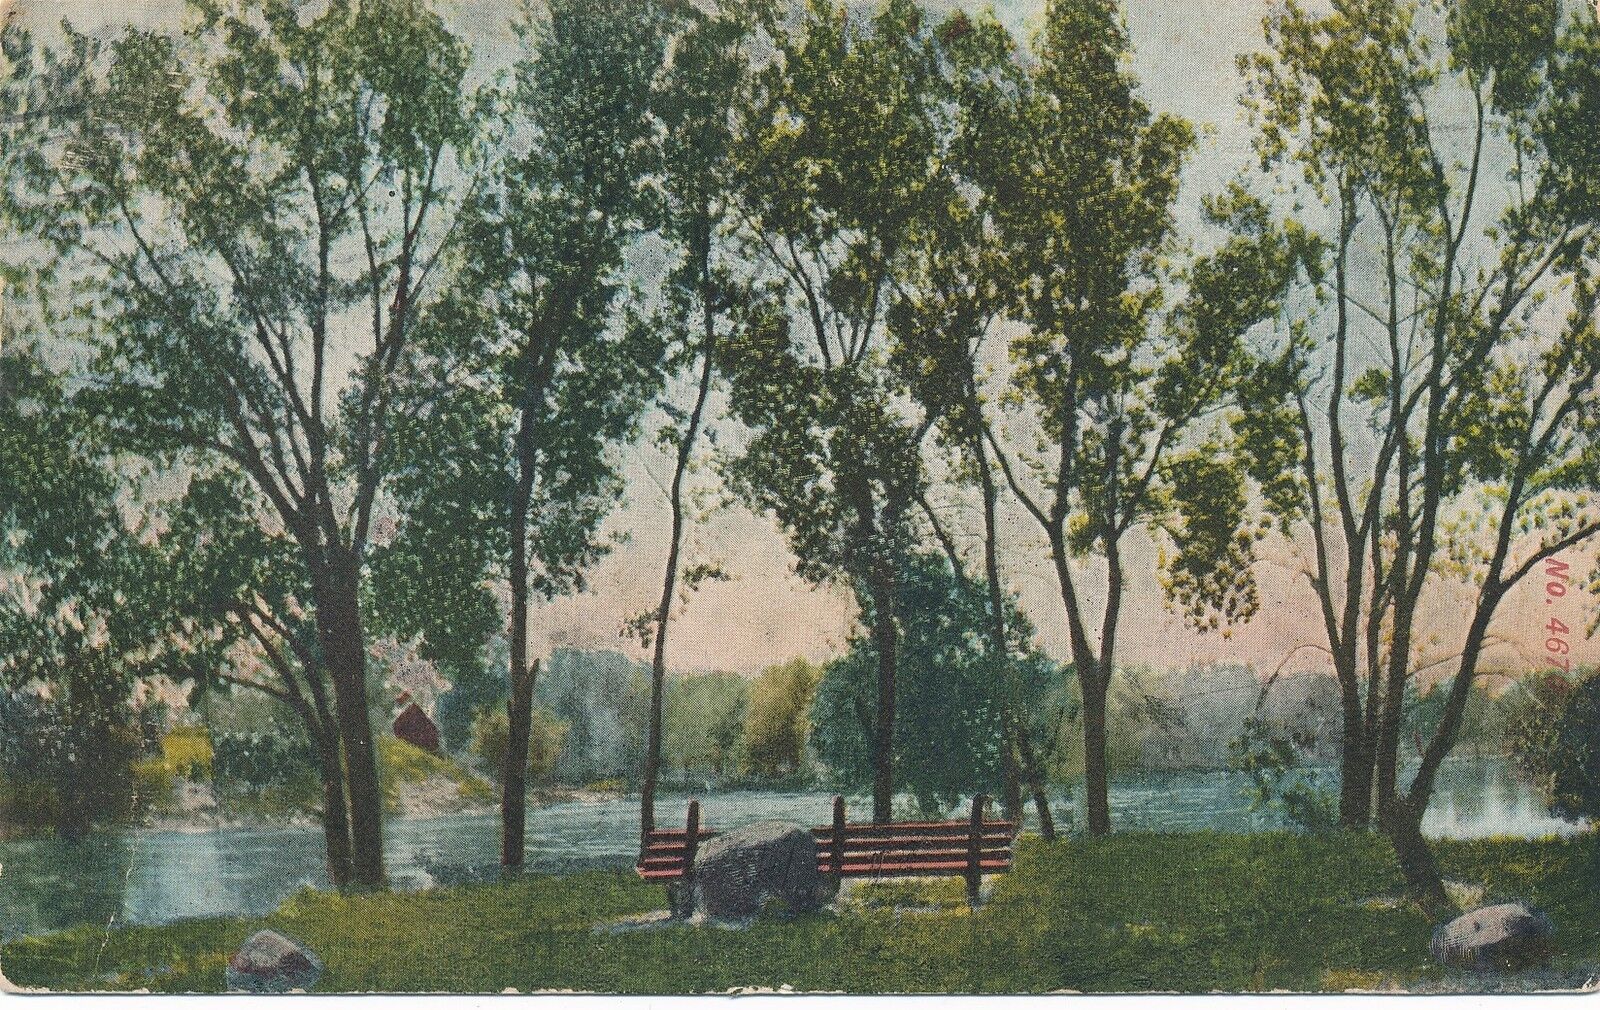 HARRISBURG PA – Paxton Creek near Harrisburg - 1910